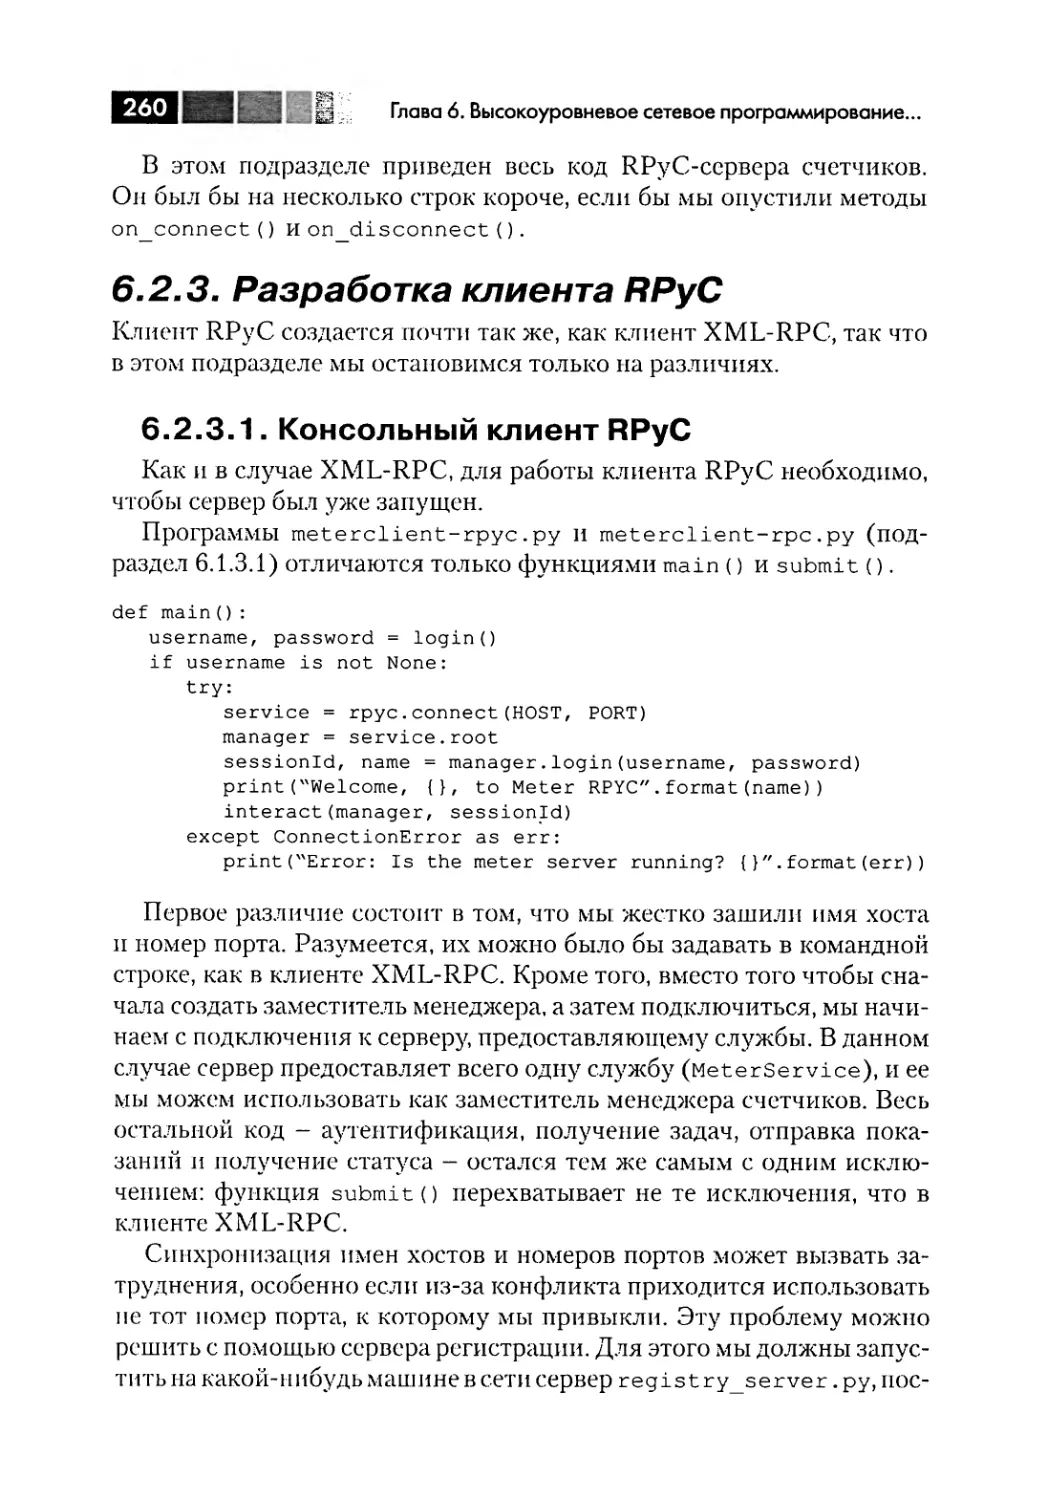 6.2.3. Разработка клиента RPyC